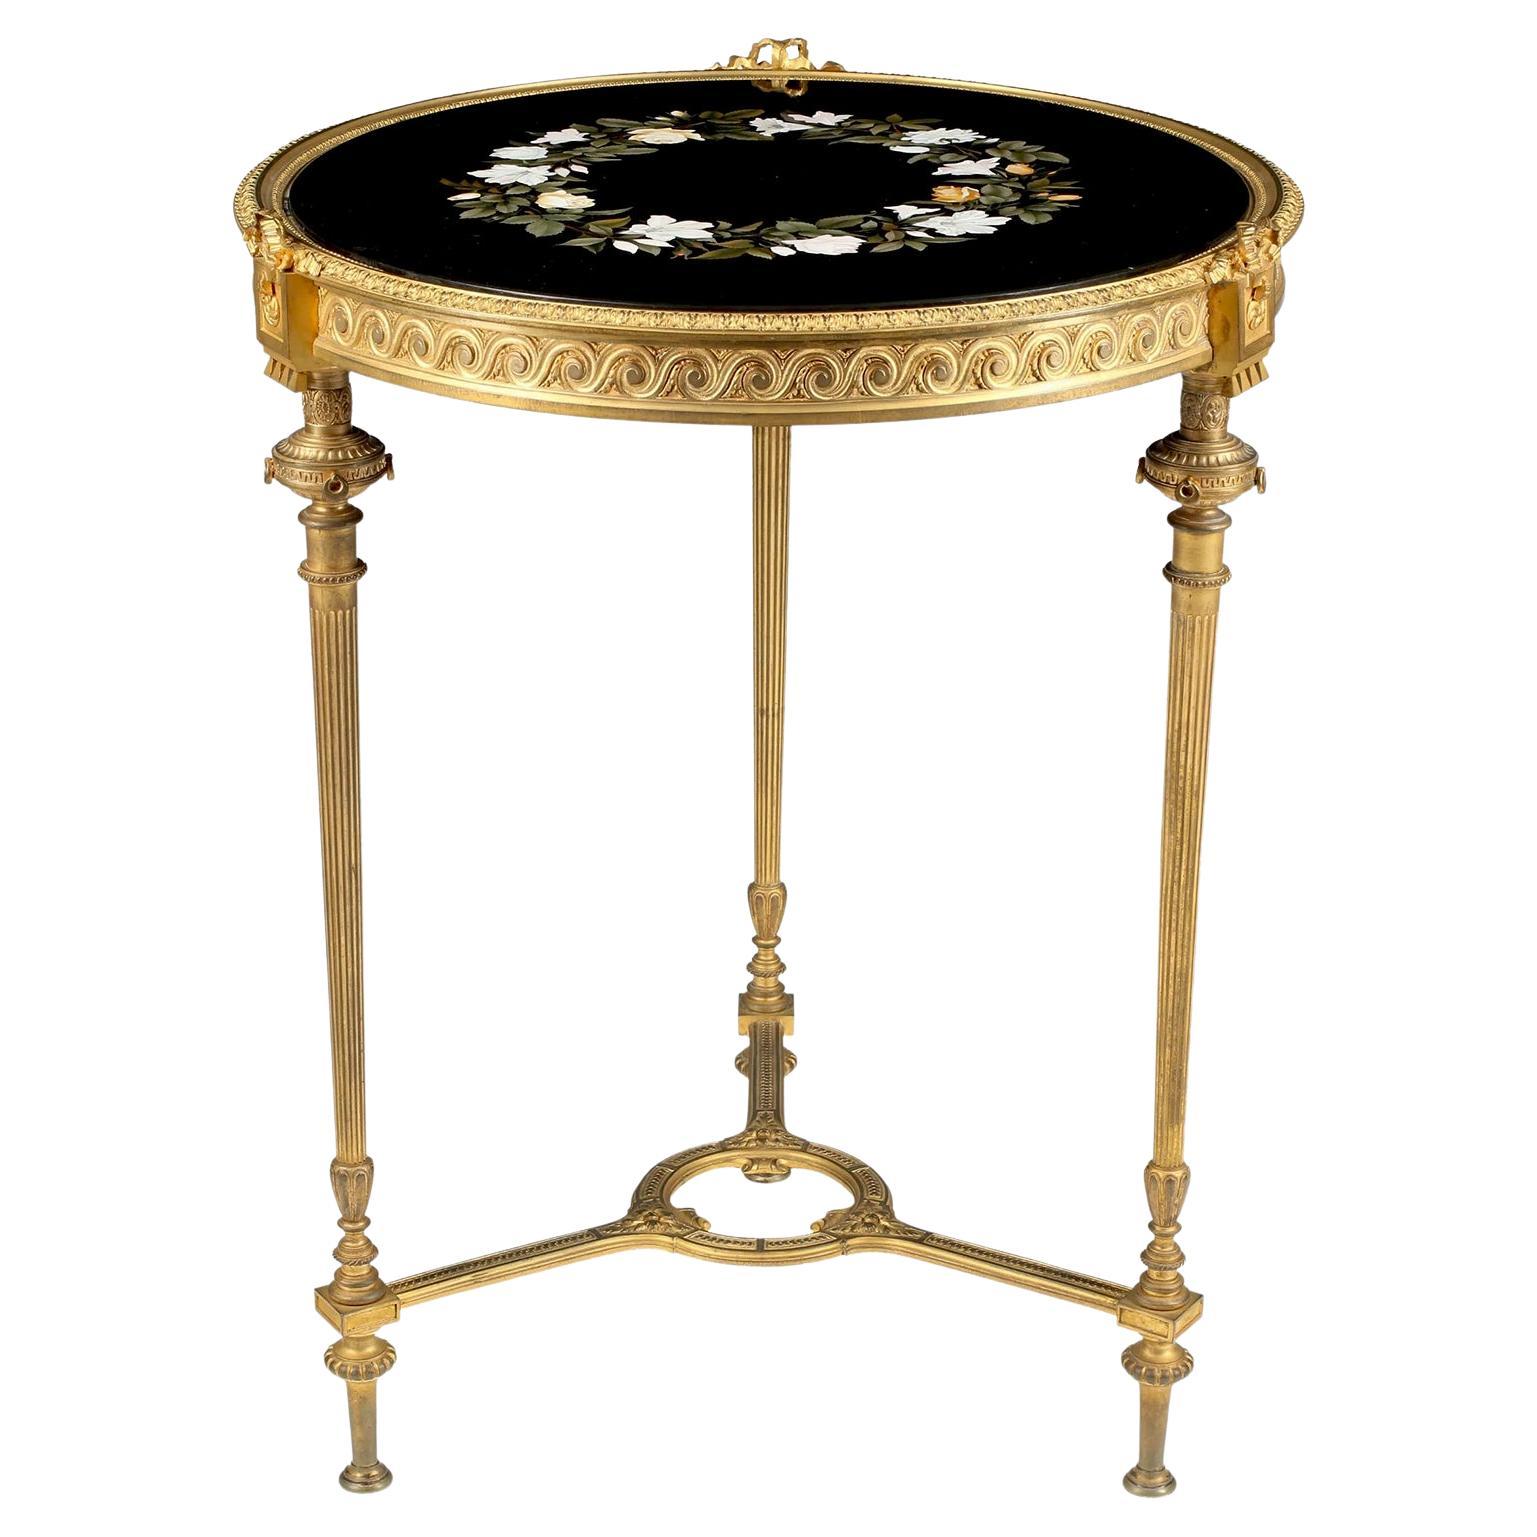 Franco-Italian 19th Century Neoclassical Style Gilt-Bronze & Pietra Dura Table For Sale